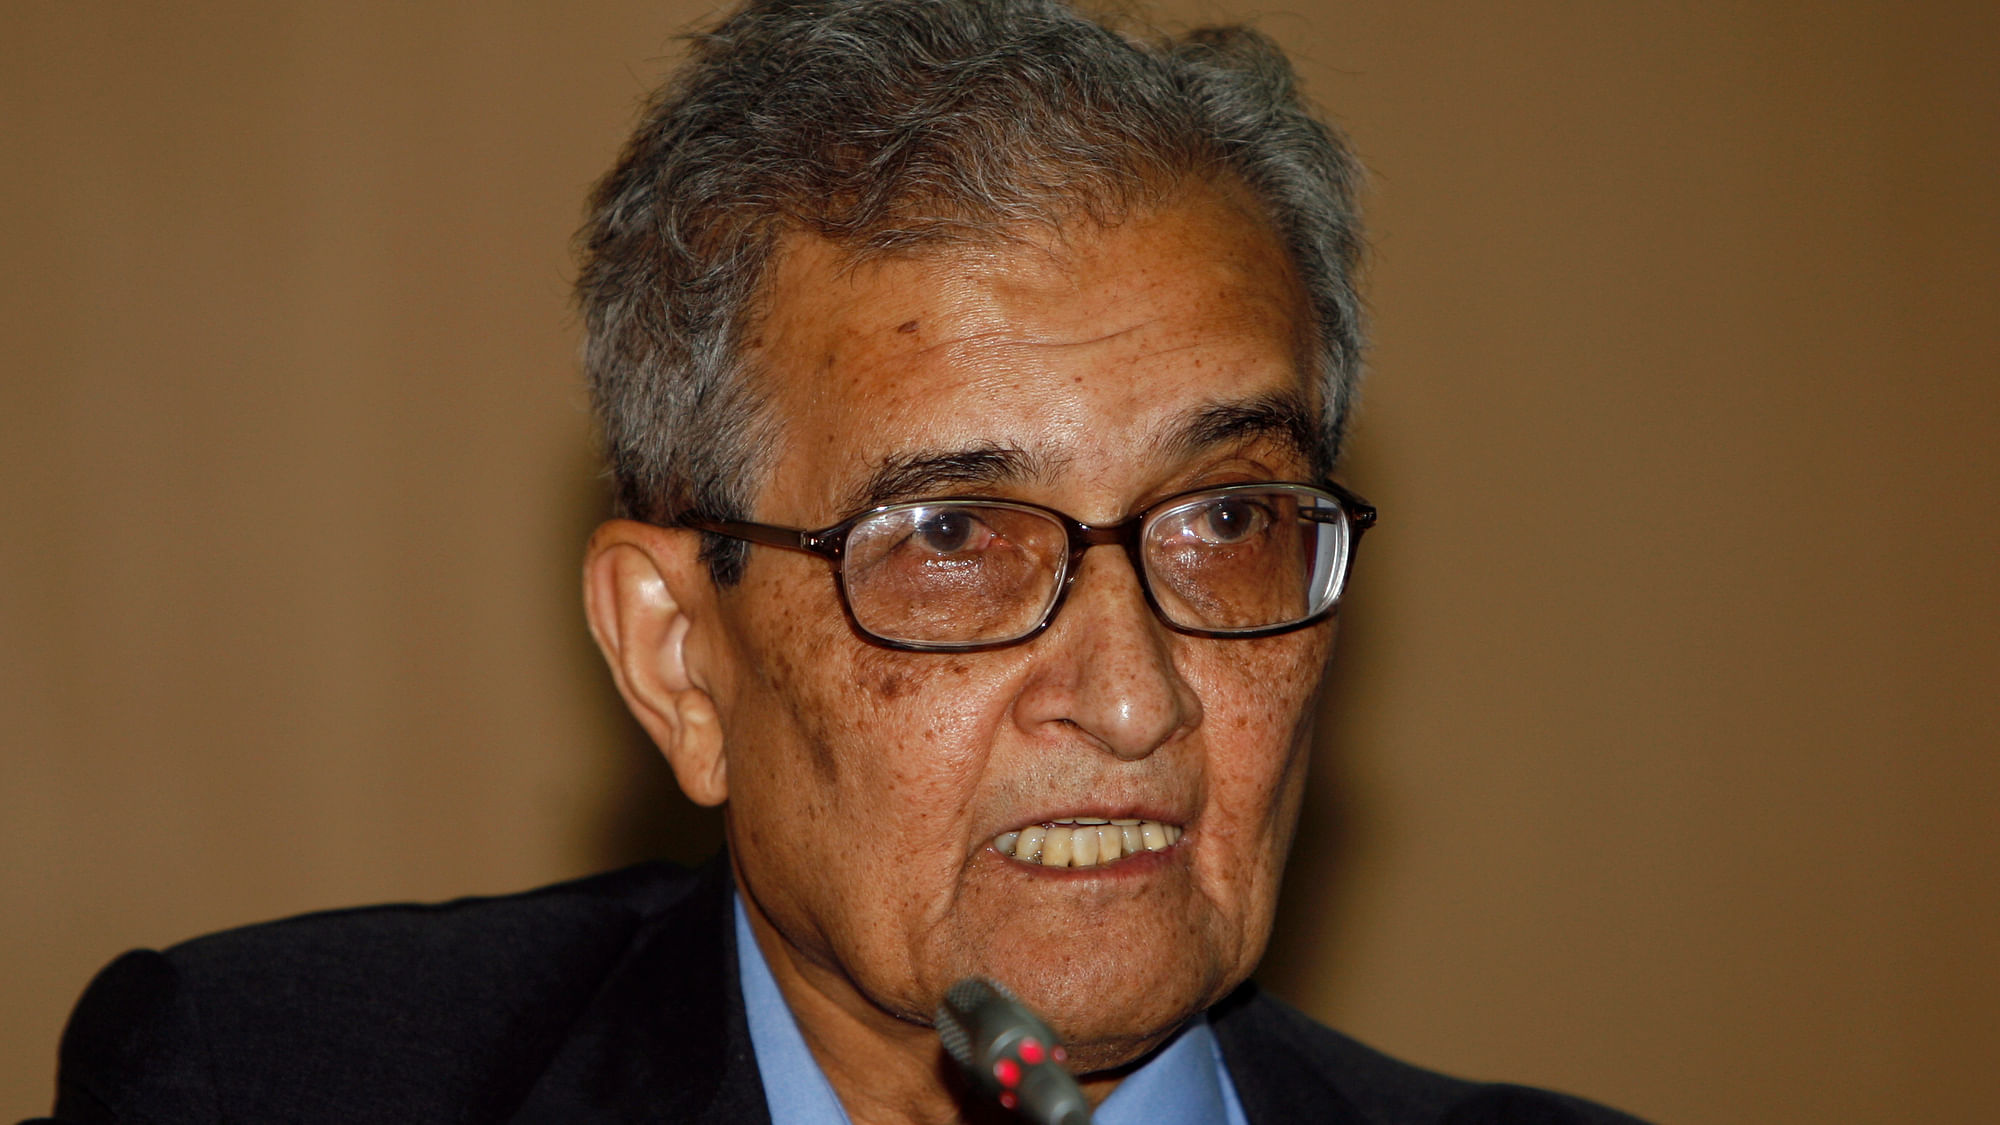 Development as Freedom by Amartya Sen